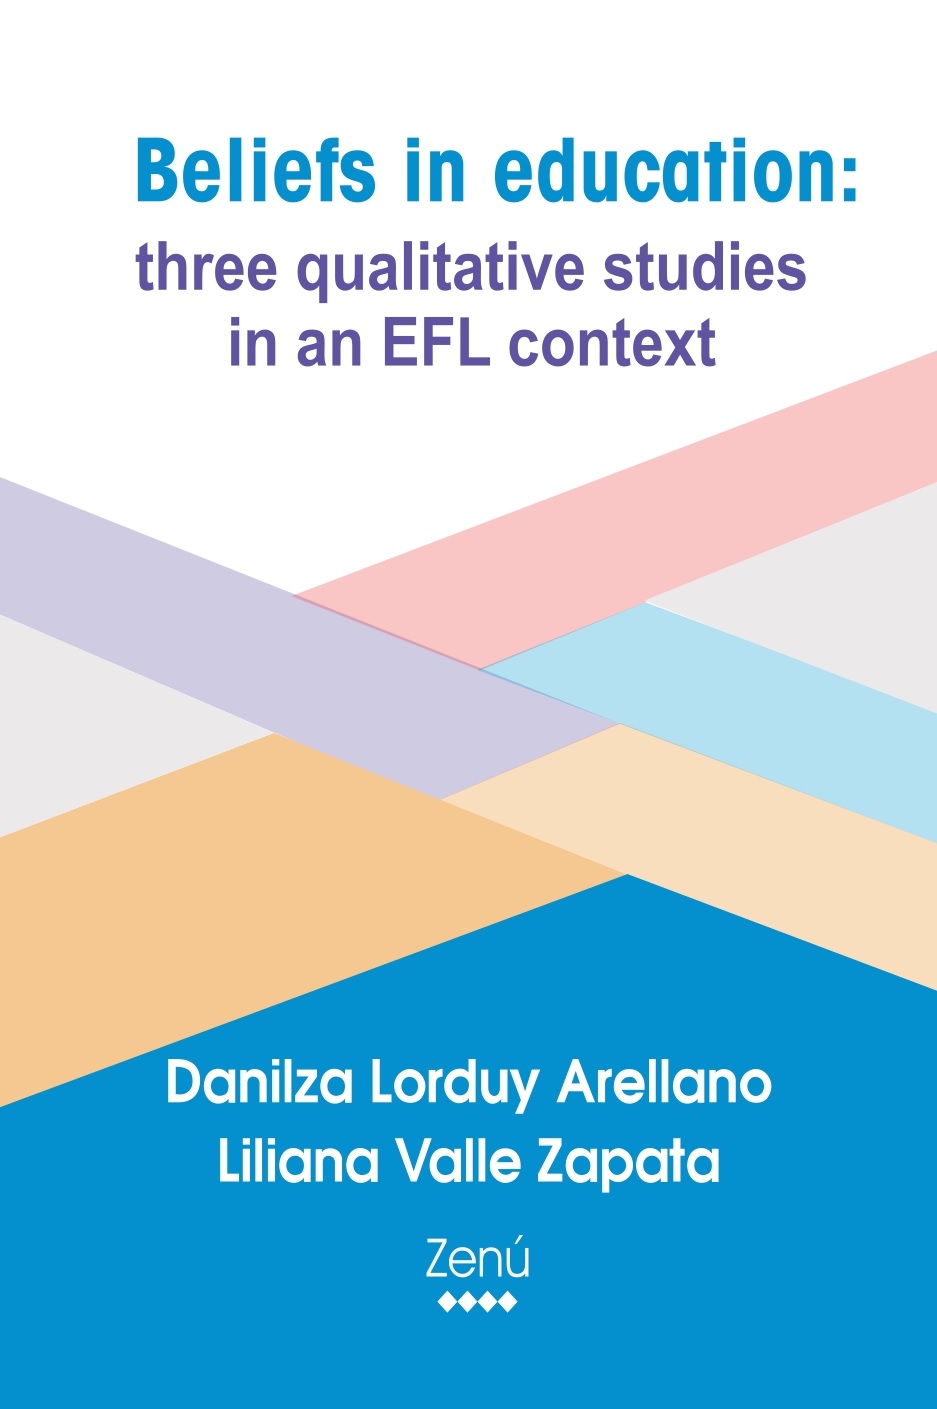 Beliefs in education: three qualitative studies in an EFL context